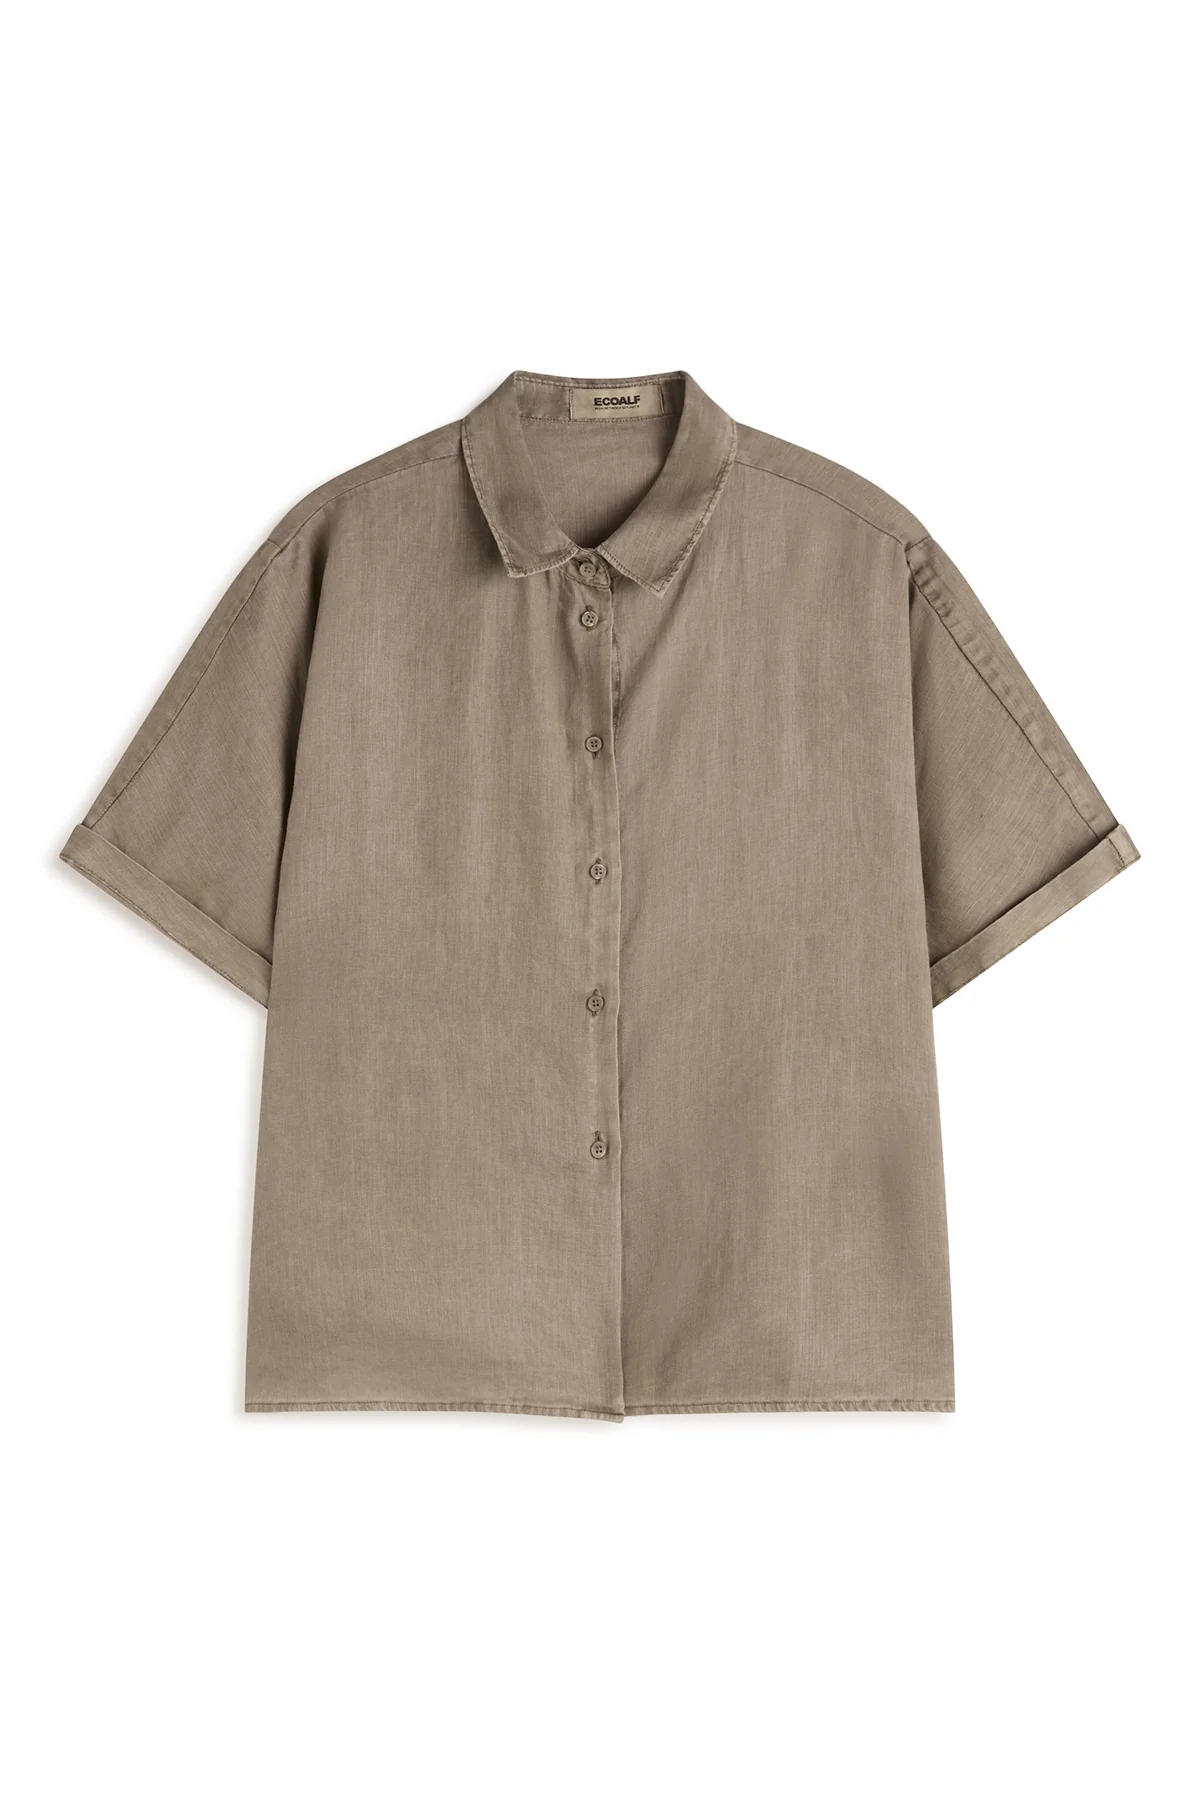 ECOALF camisa manga corta en lino color caqui - 5